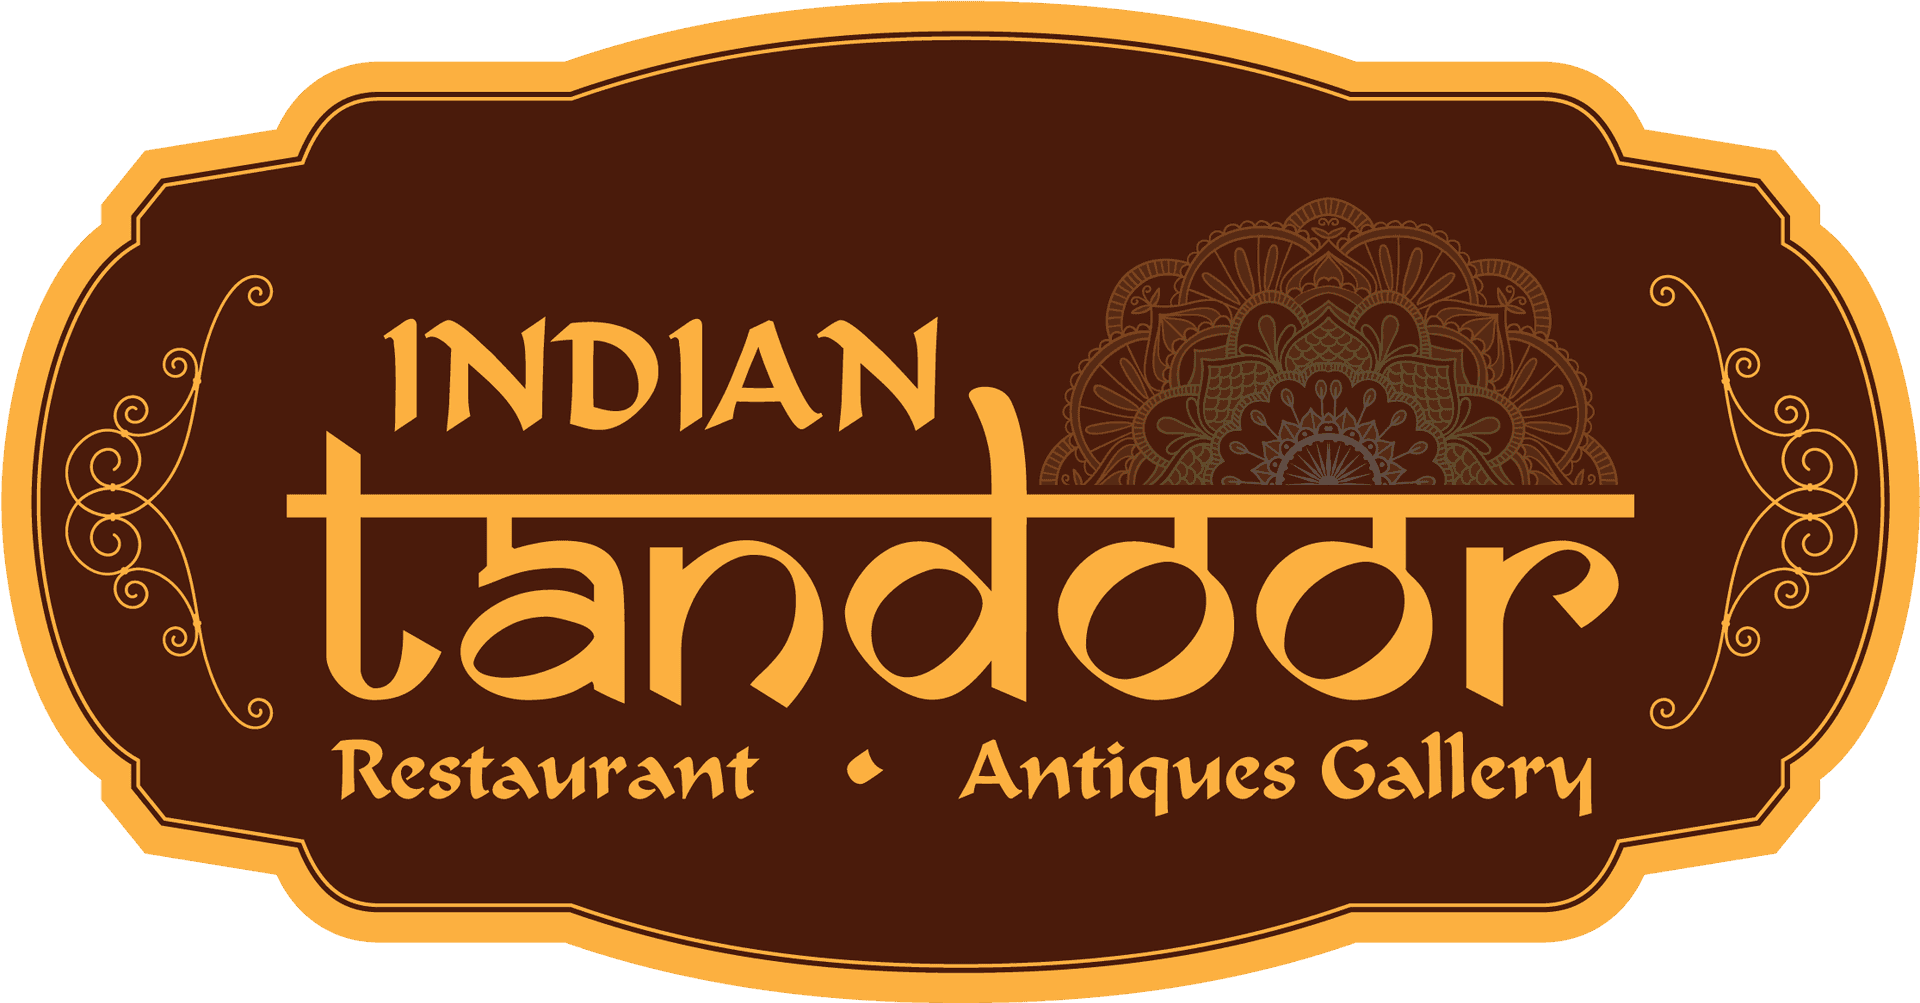 Indian Tandoor Restaurant Antiques Gallery Logo PNG